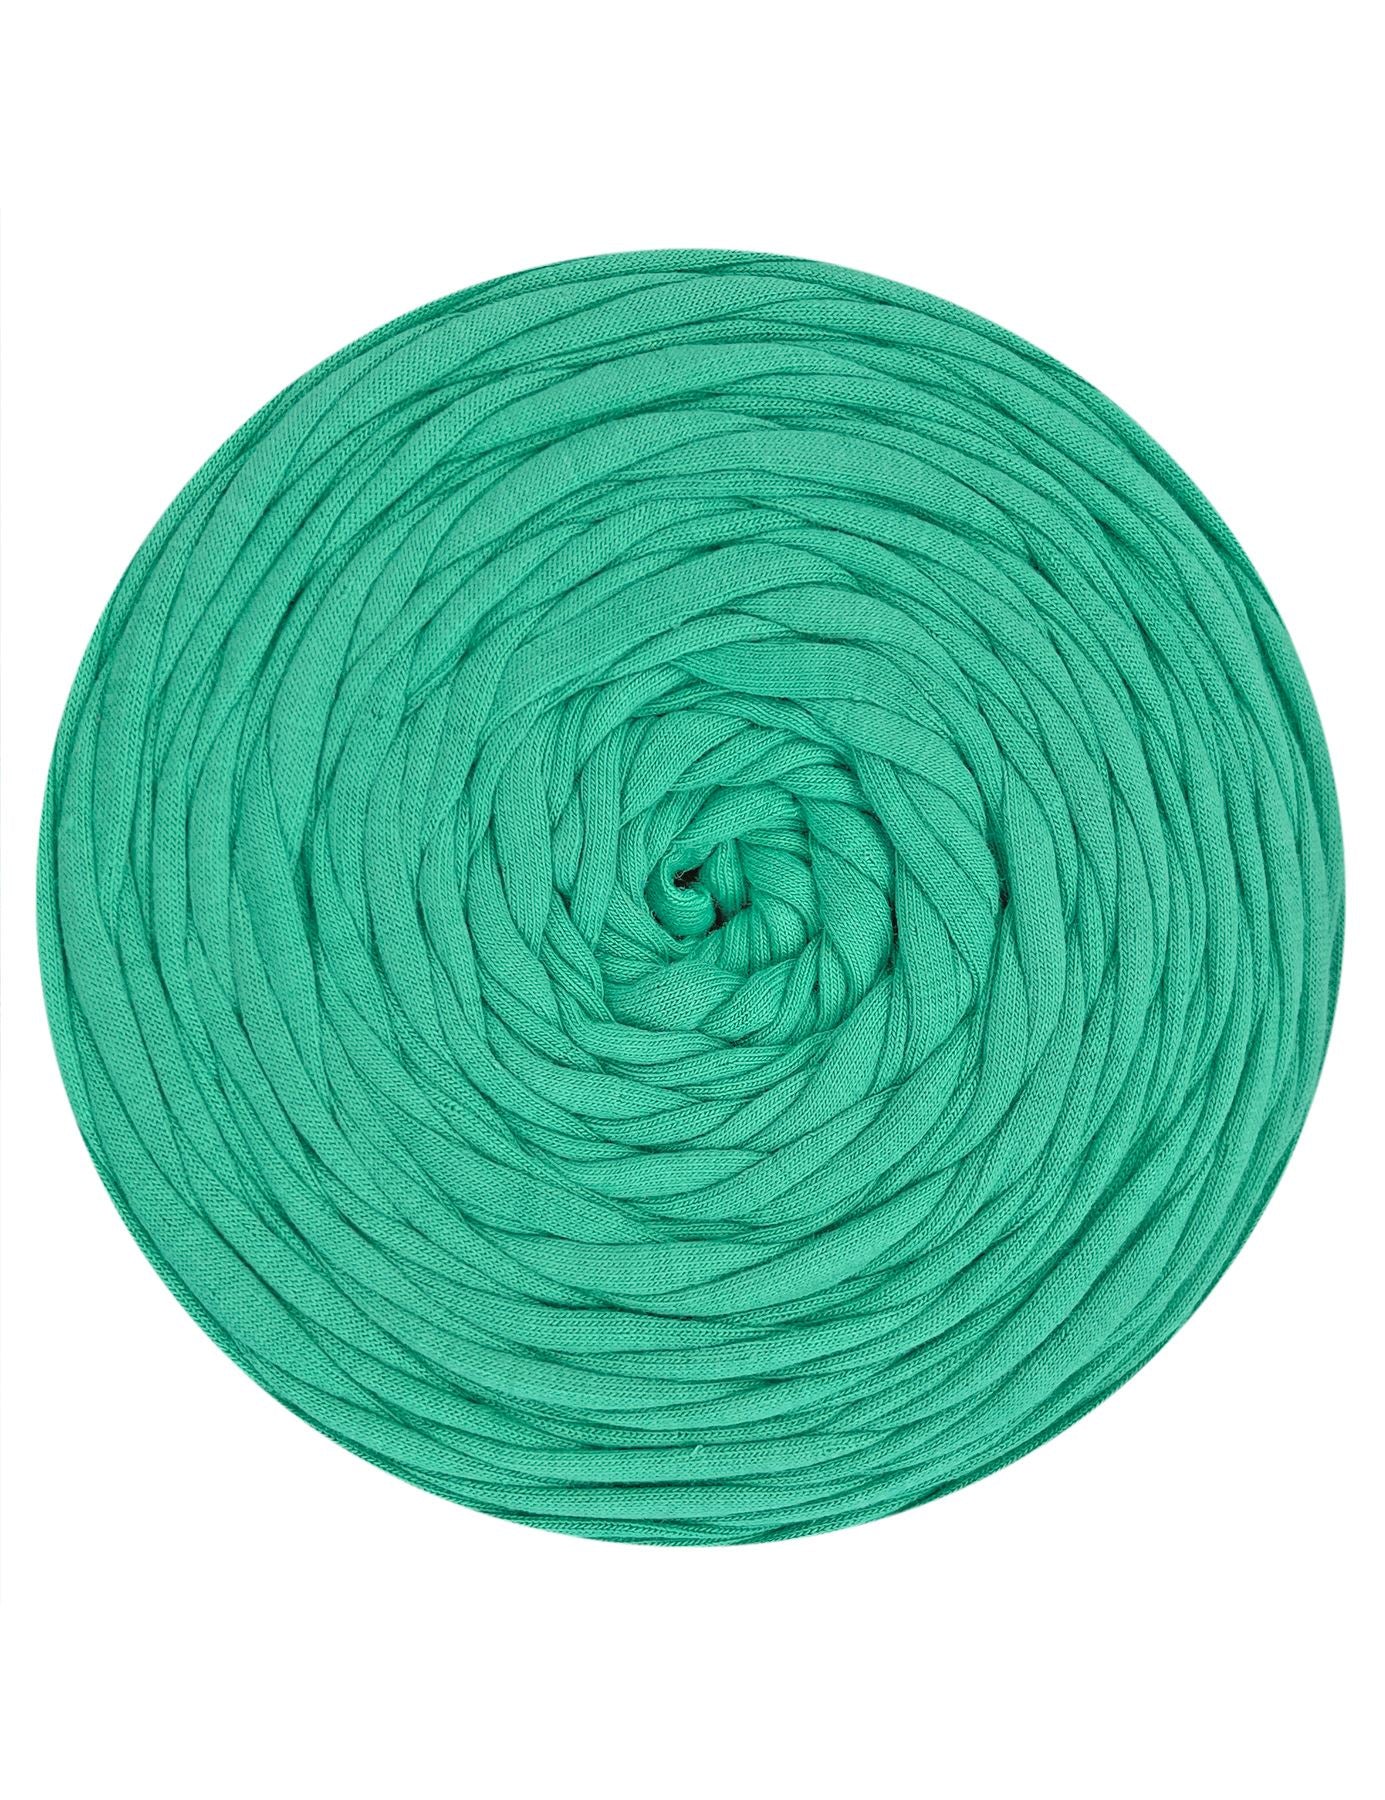 Muted seafoam green t-shirt yarn (100-120m)